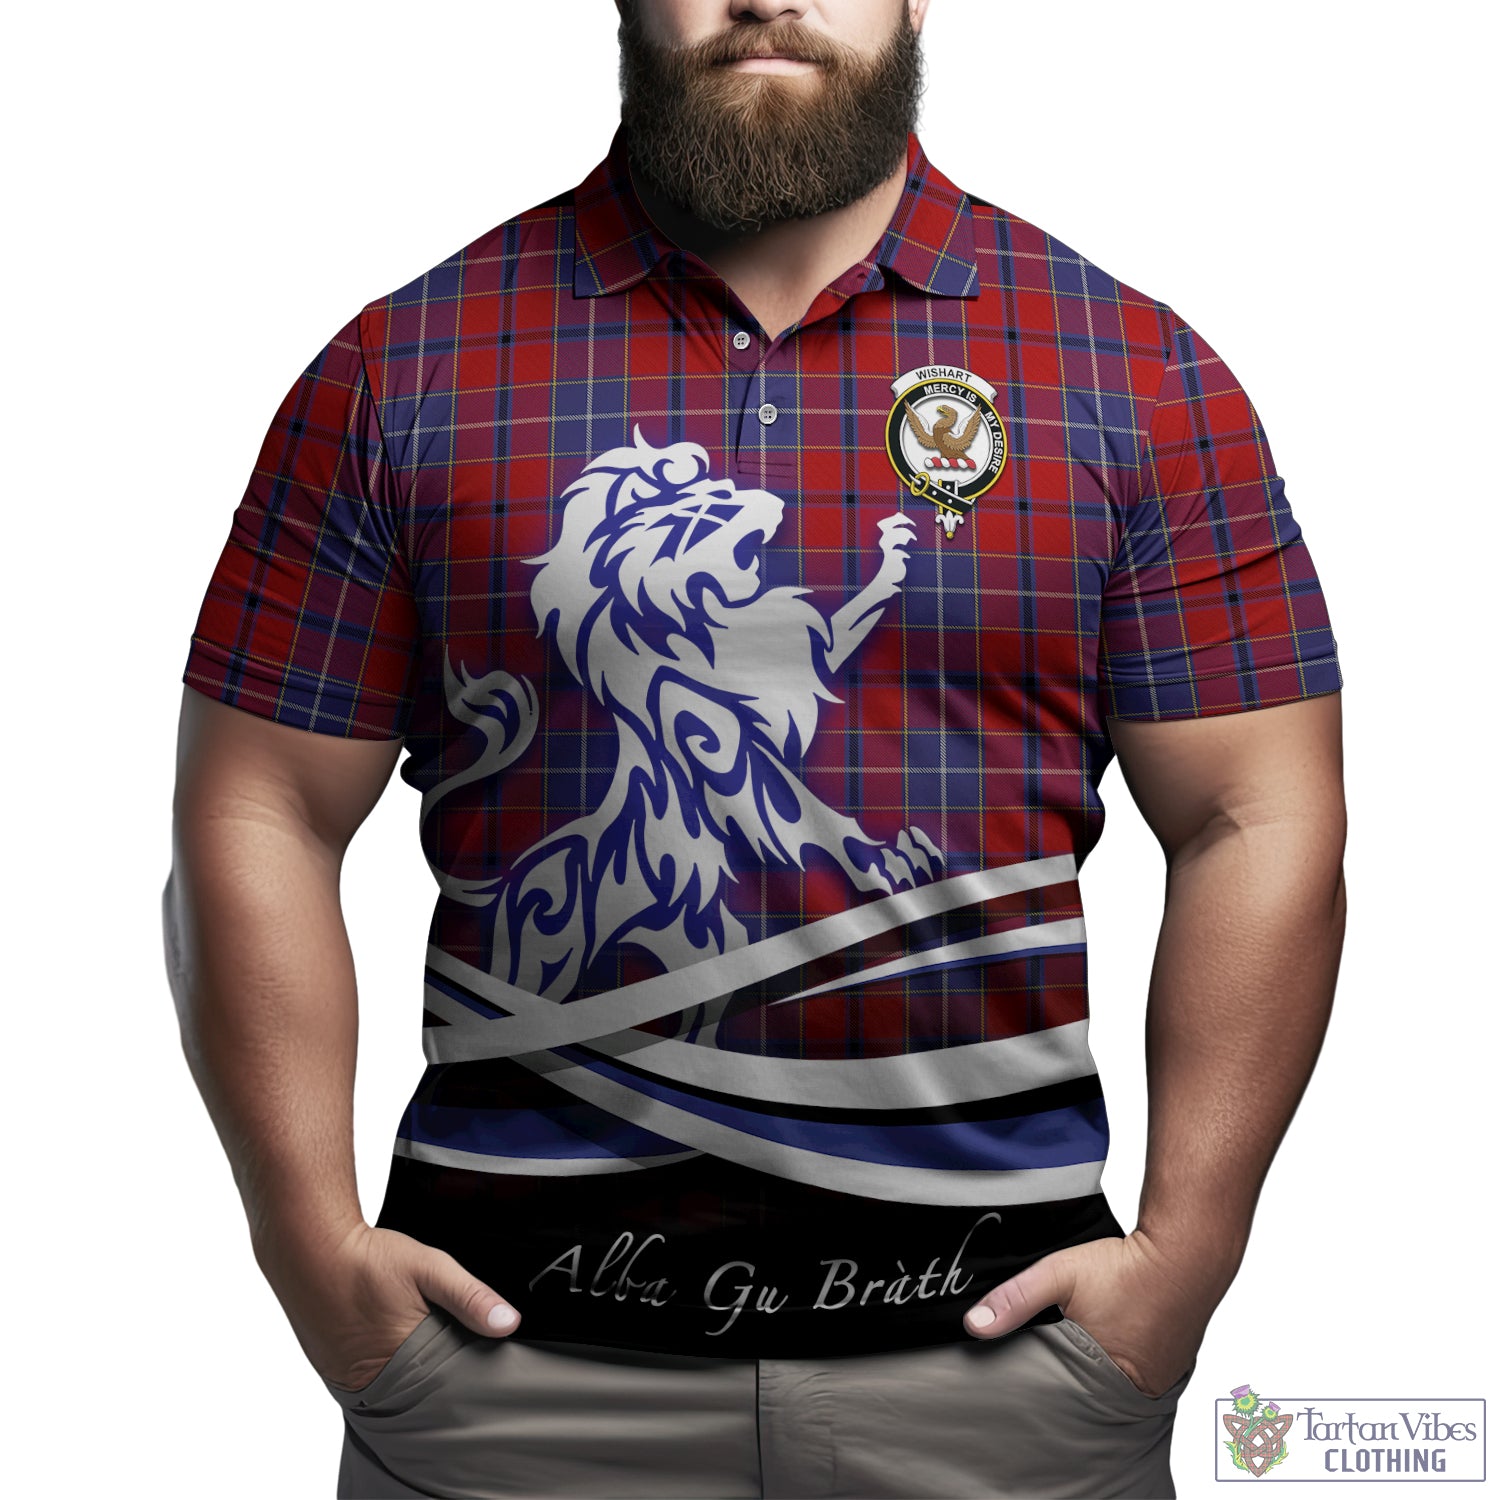 wishart-dress-tartan-polo-shirt-with-alba-gu-brath-regal-lion-emblem